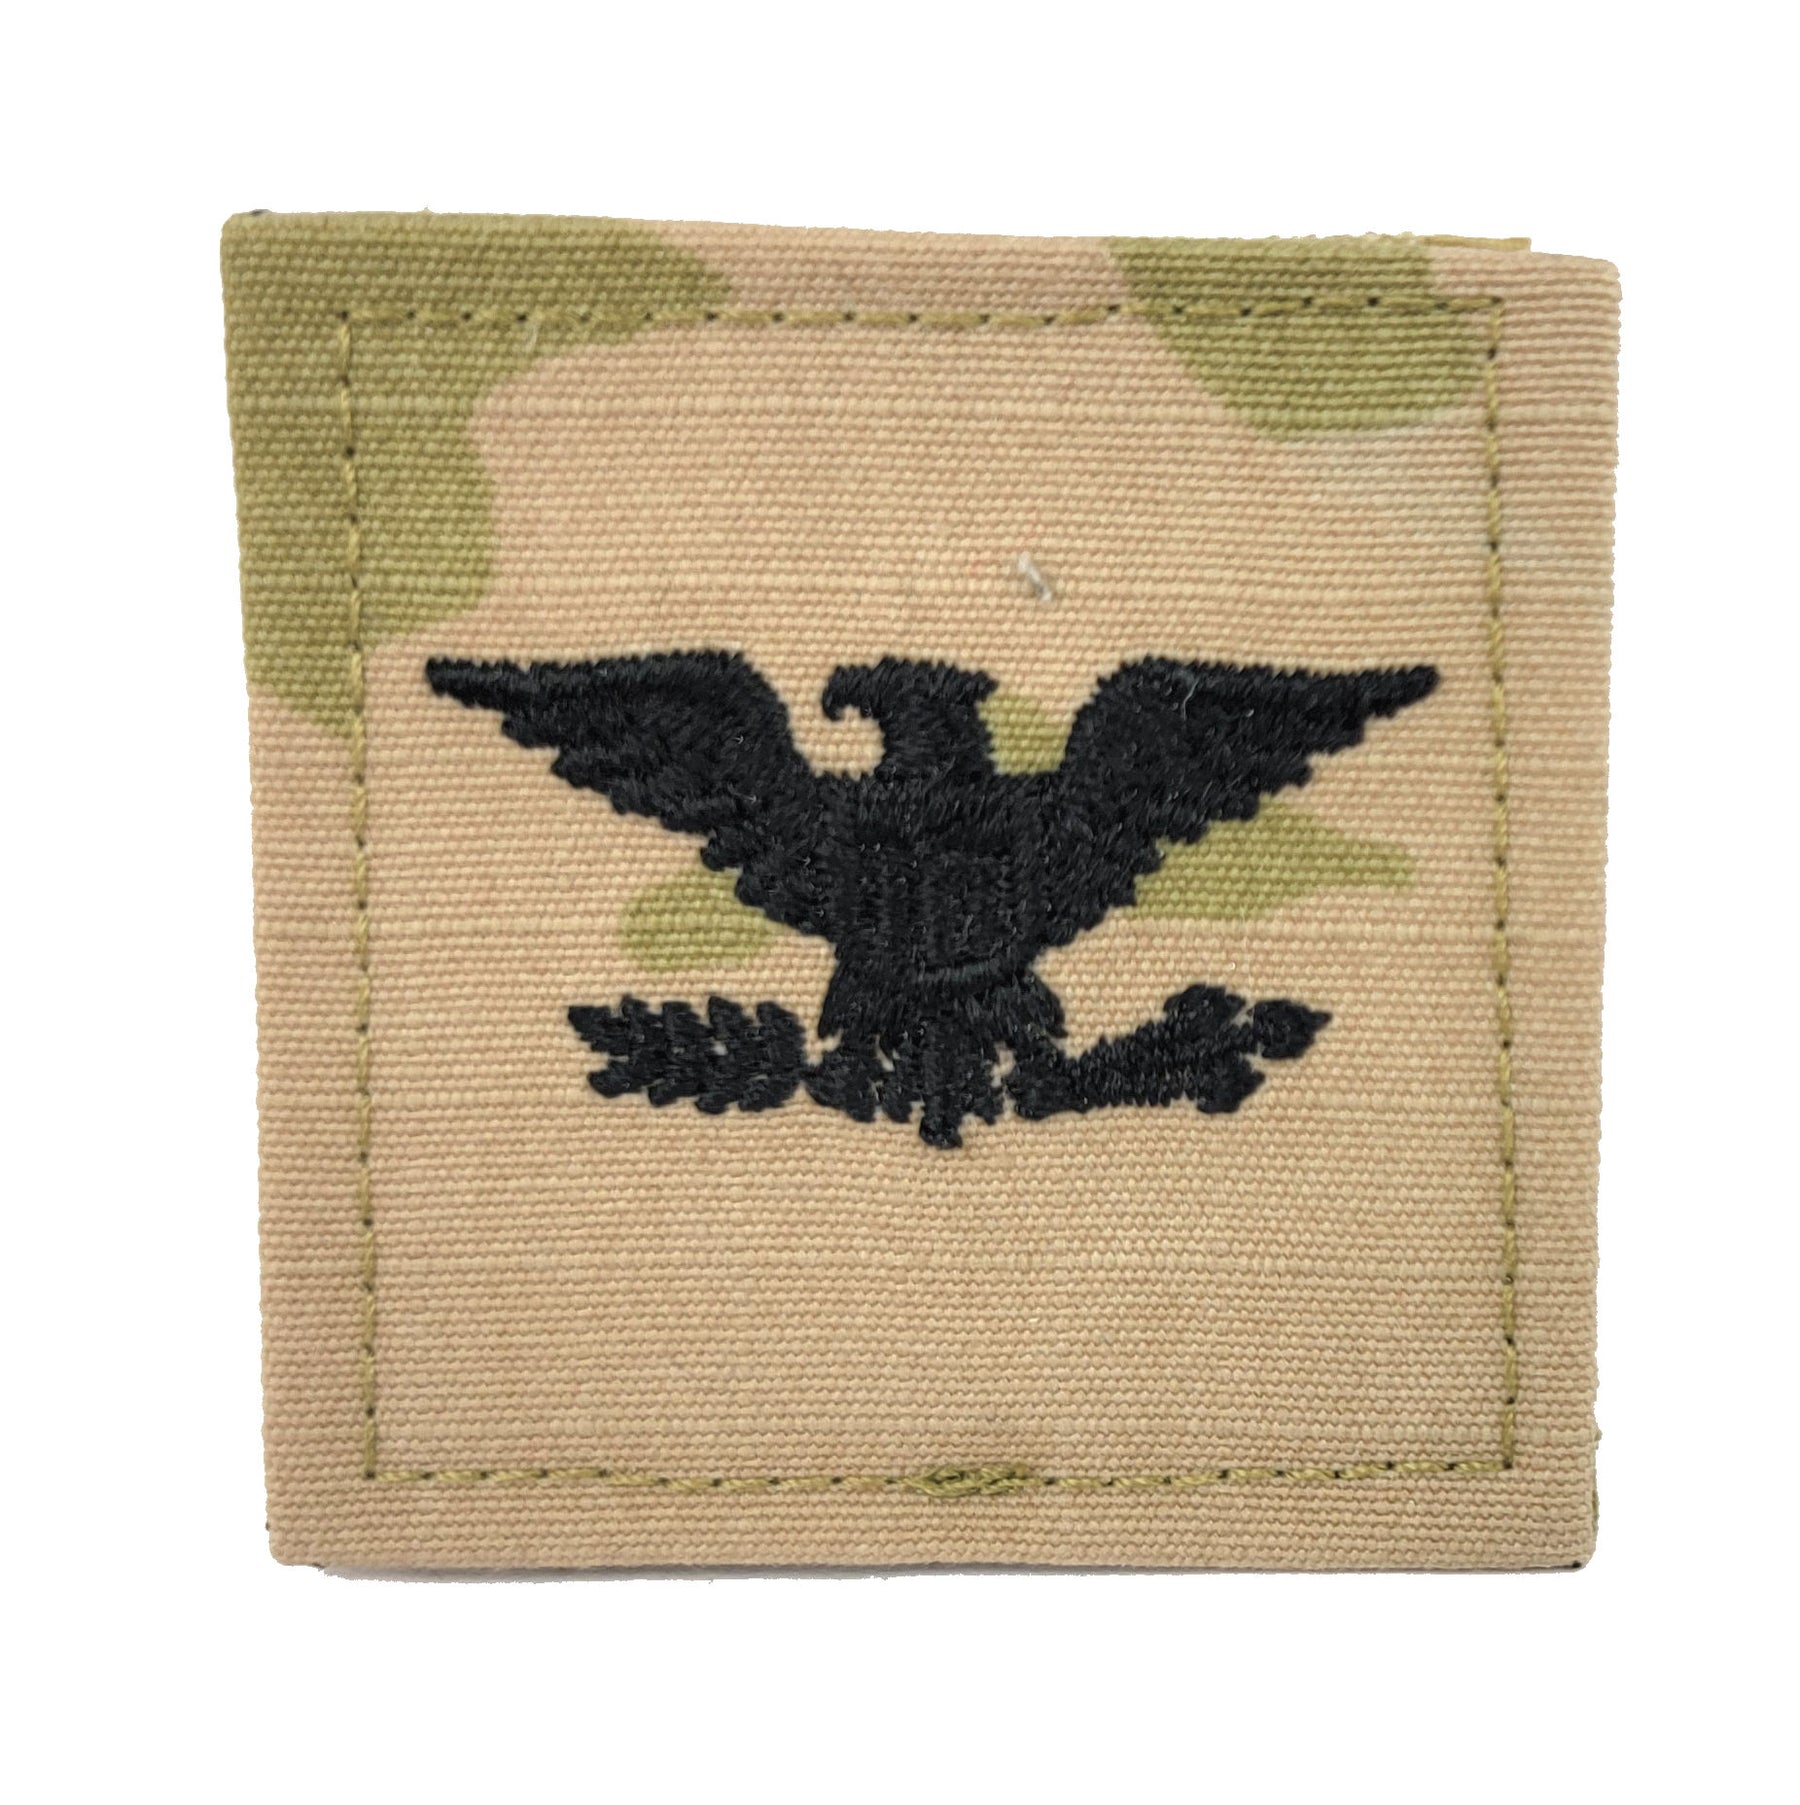 U.S. Army OCP Rank Insignia - Hook Colonel